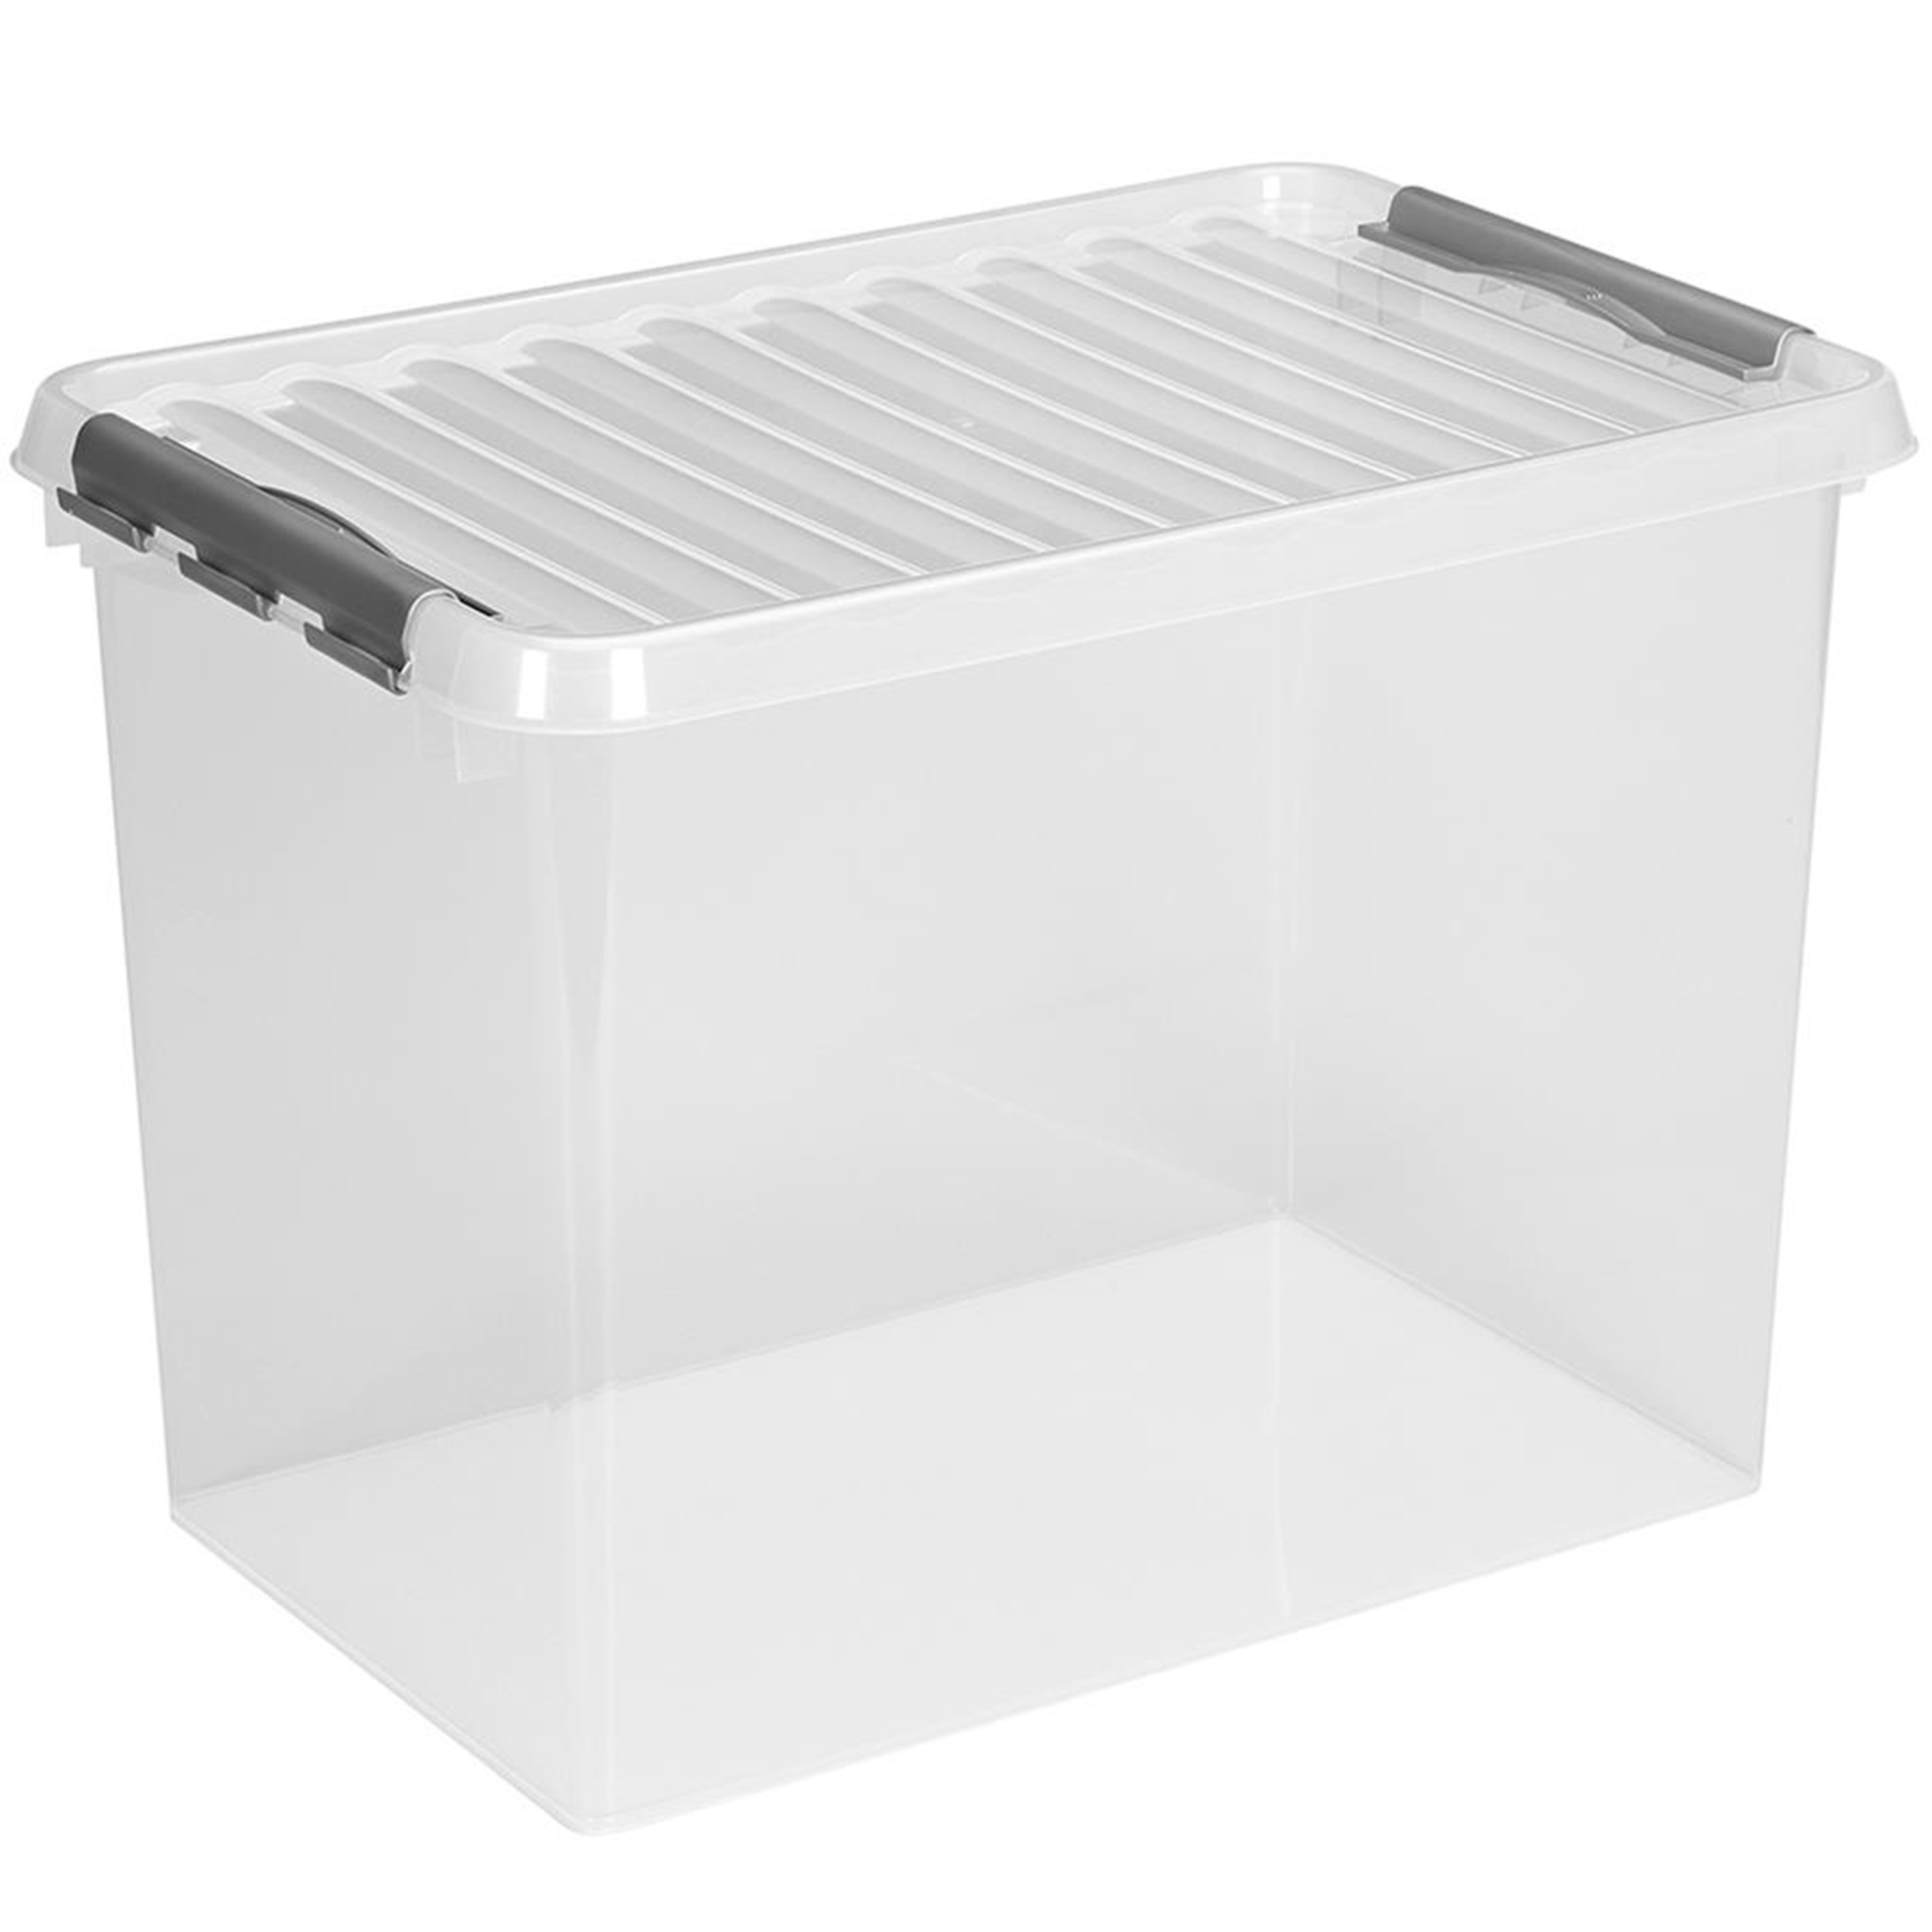 Sunware opslagbox met deksel kunststof 72 liter 60 x 40 x 42 cm